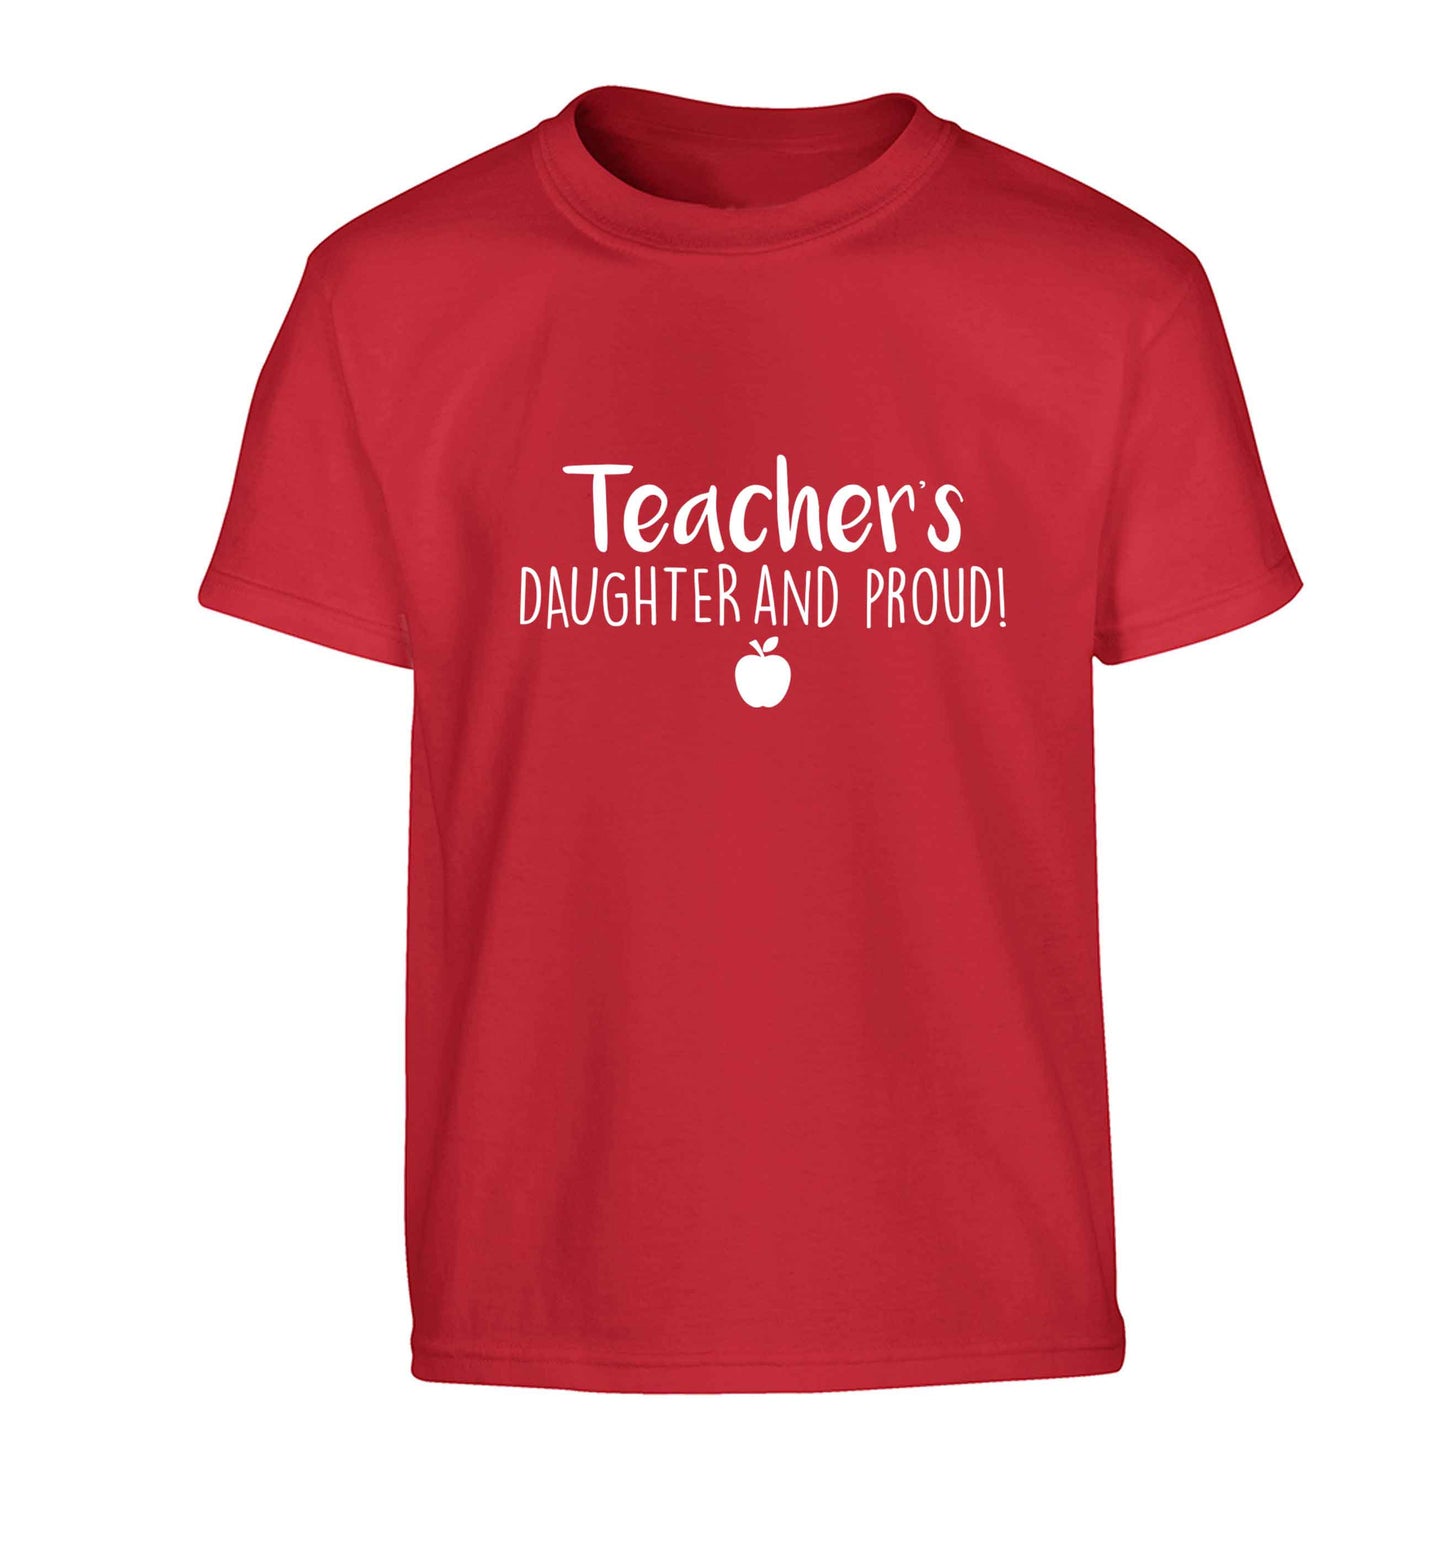 Teachers daughter and proud Children's red Tshirt 12-13 Years